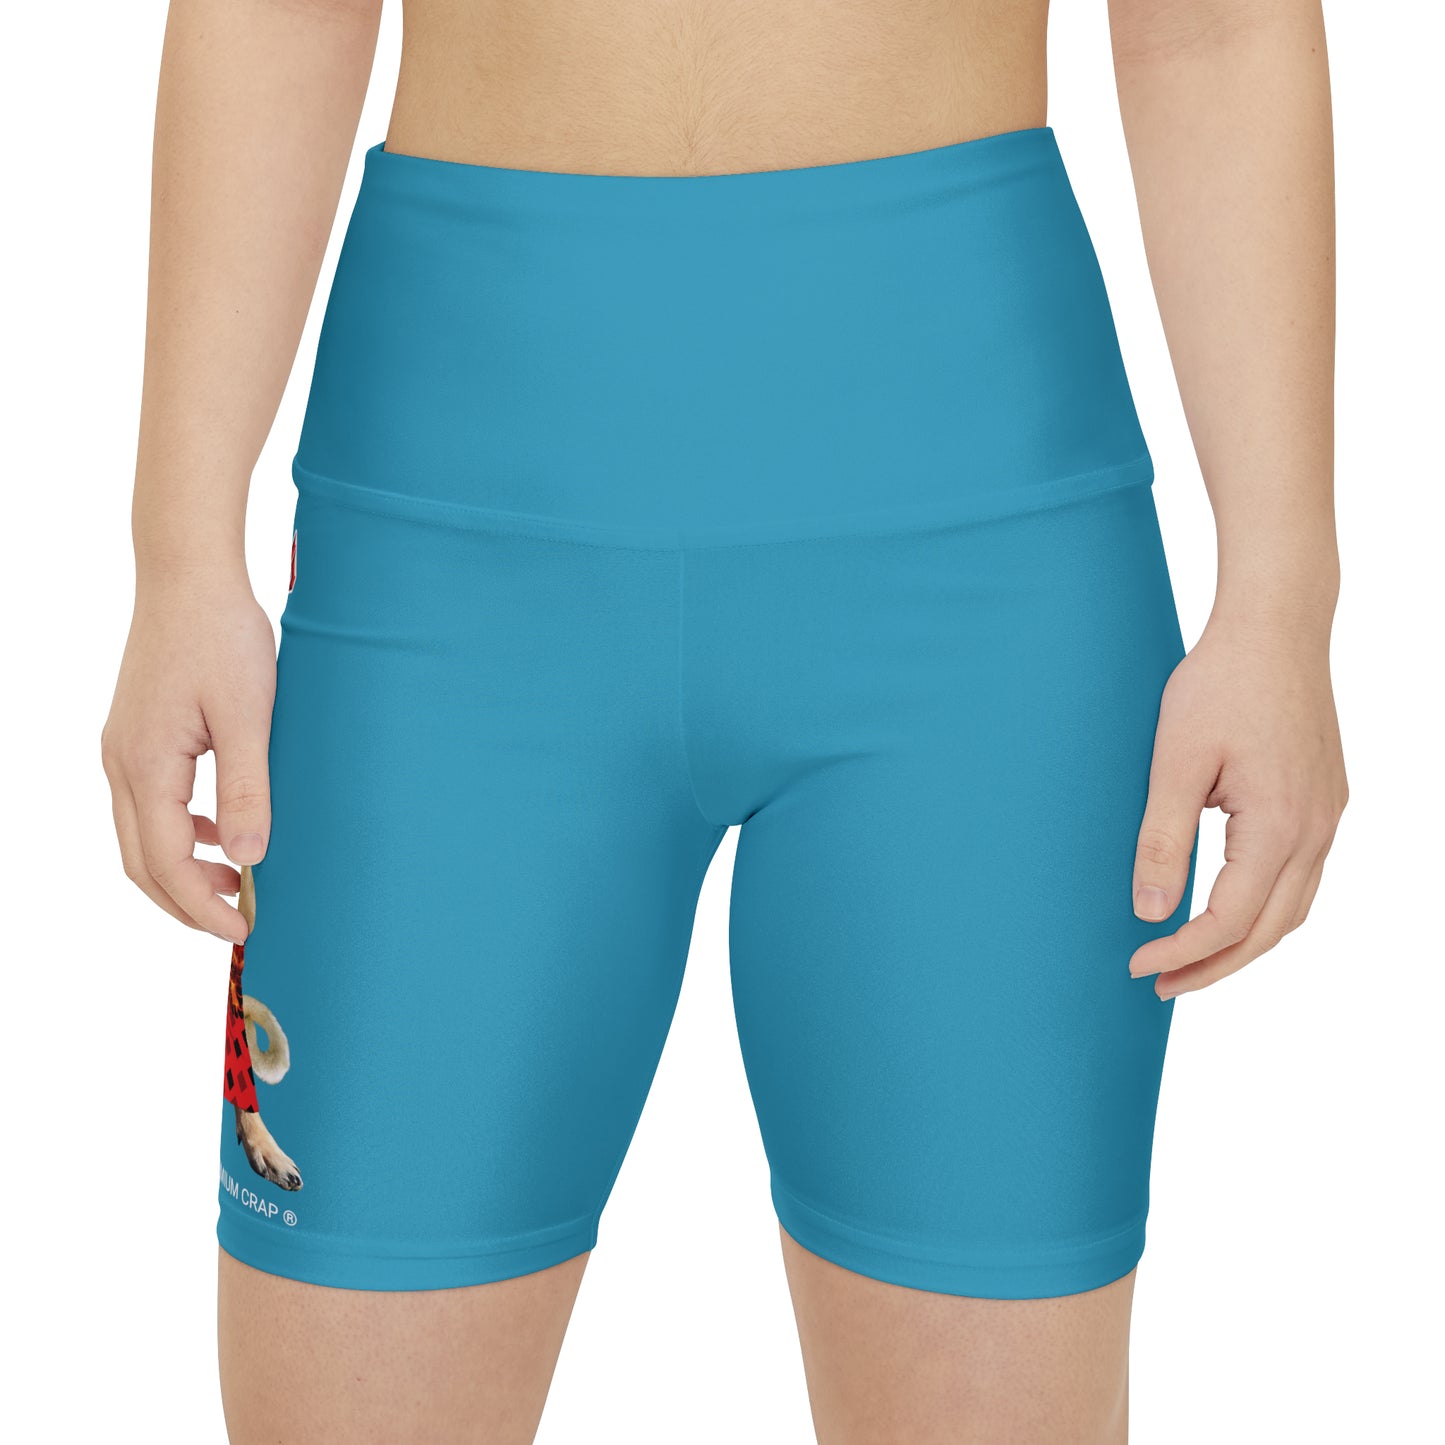 Premium Crap II Women's Workout Shorts  - Turquoise